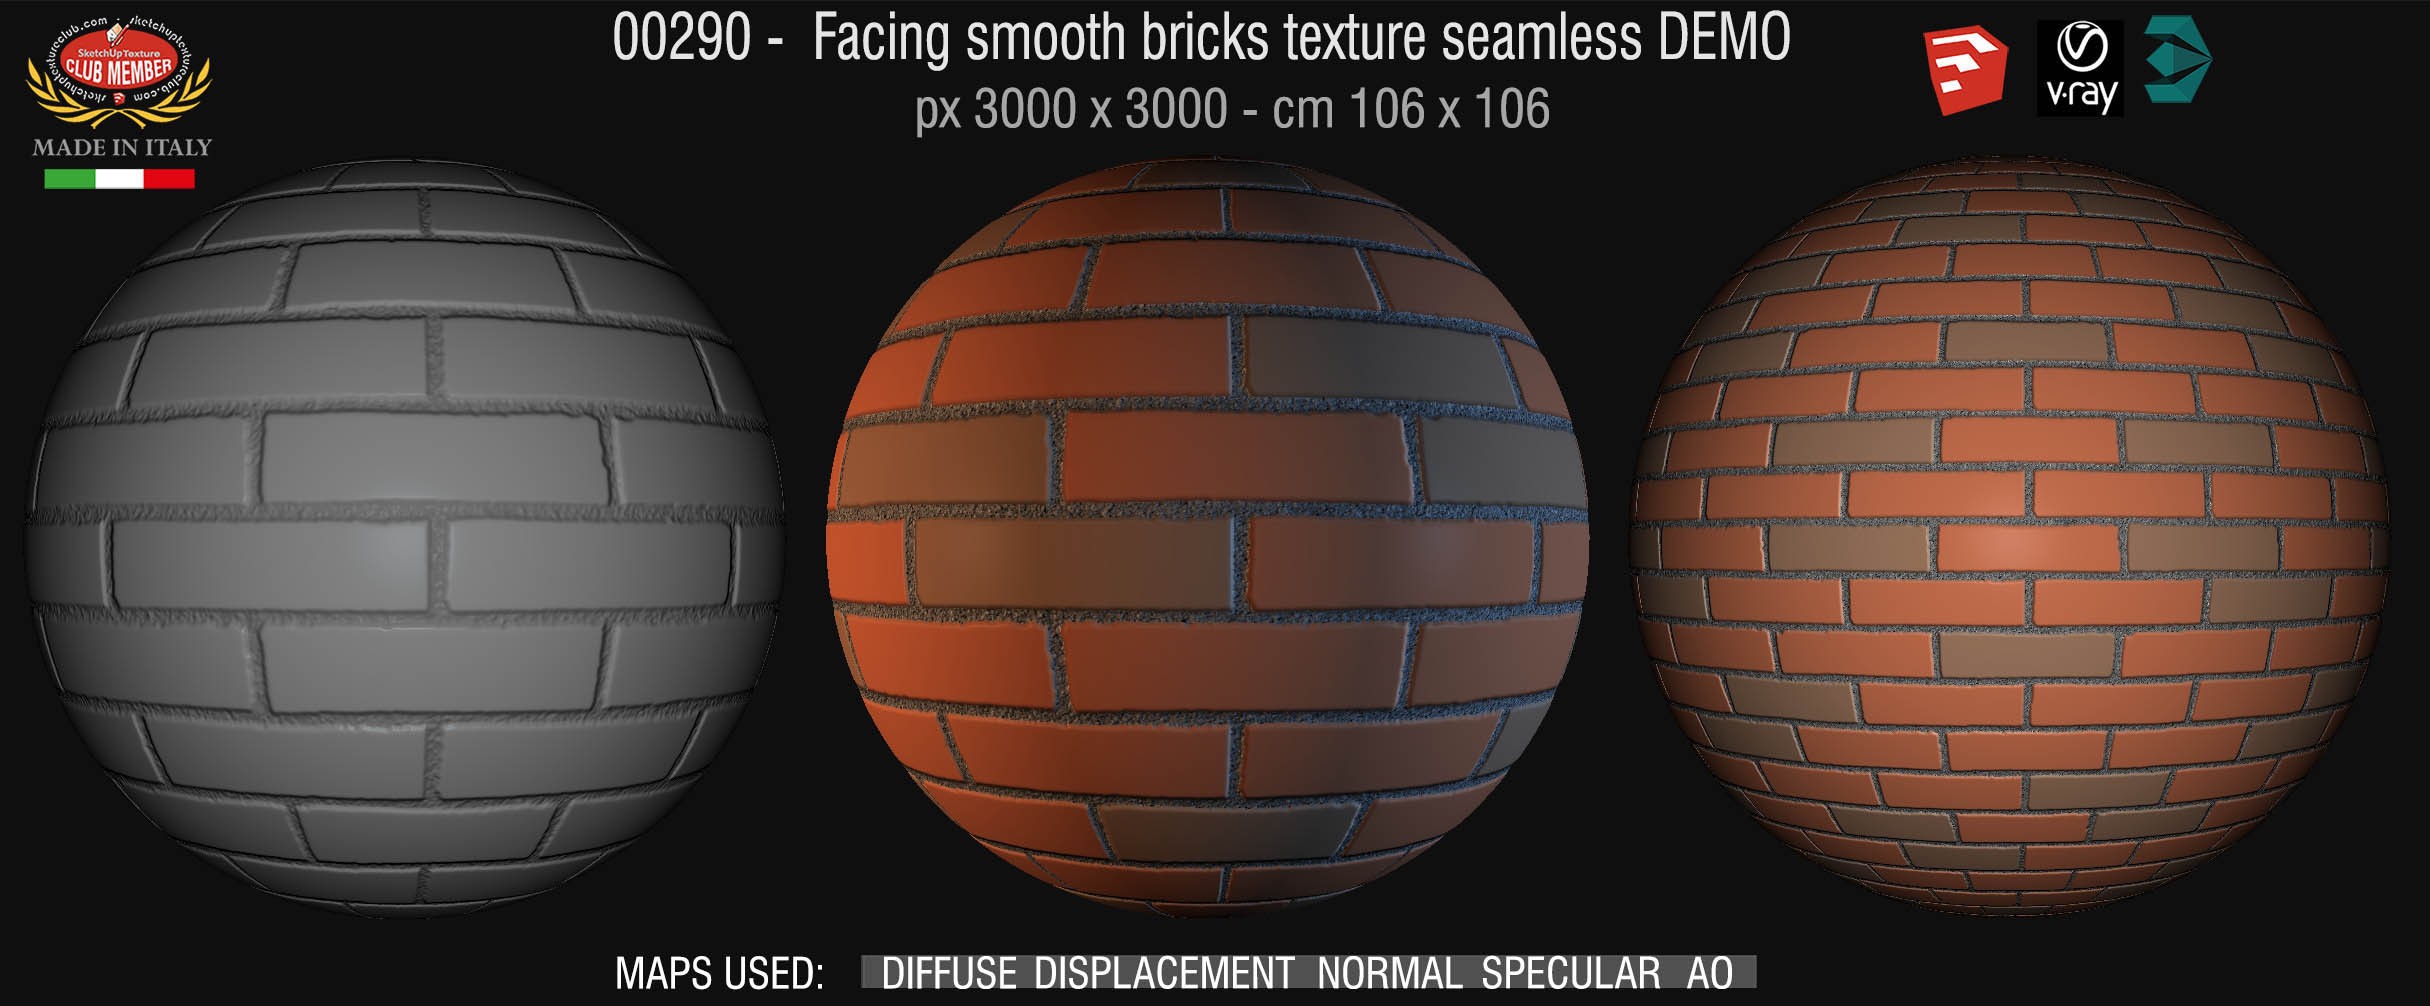 00290 Facing smooth bricks texture seamless + maps DEMO